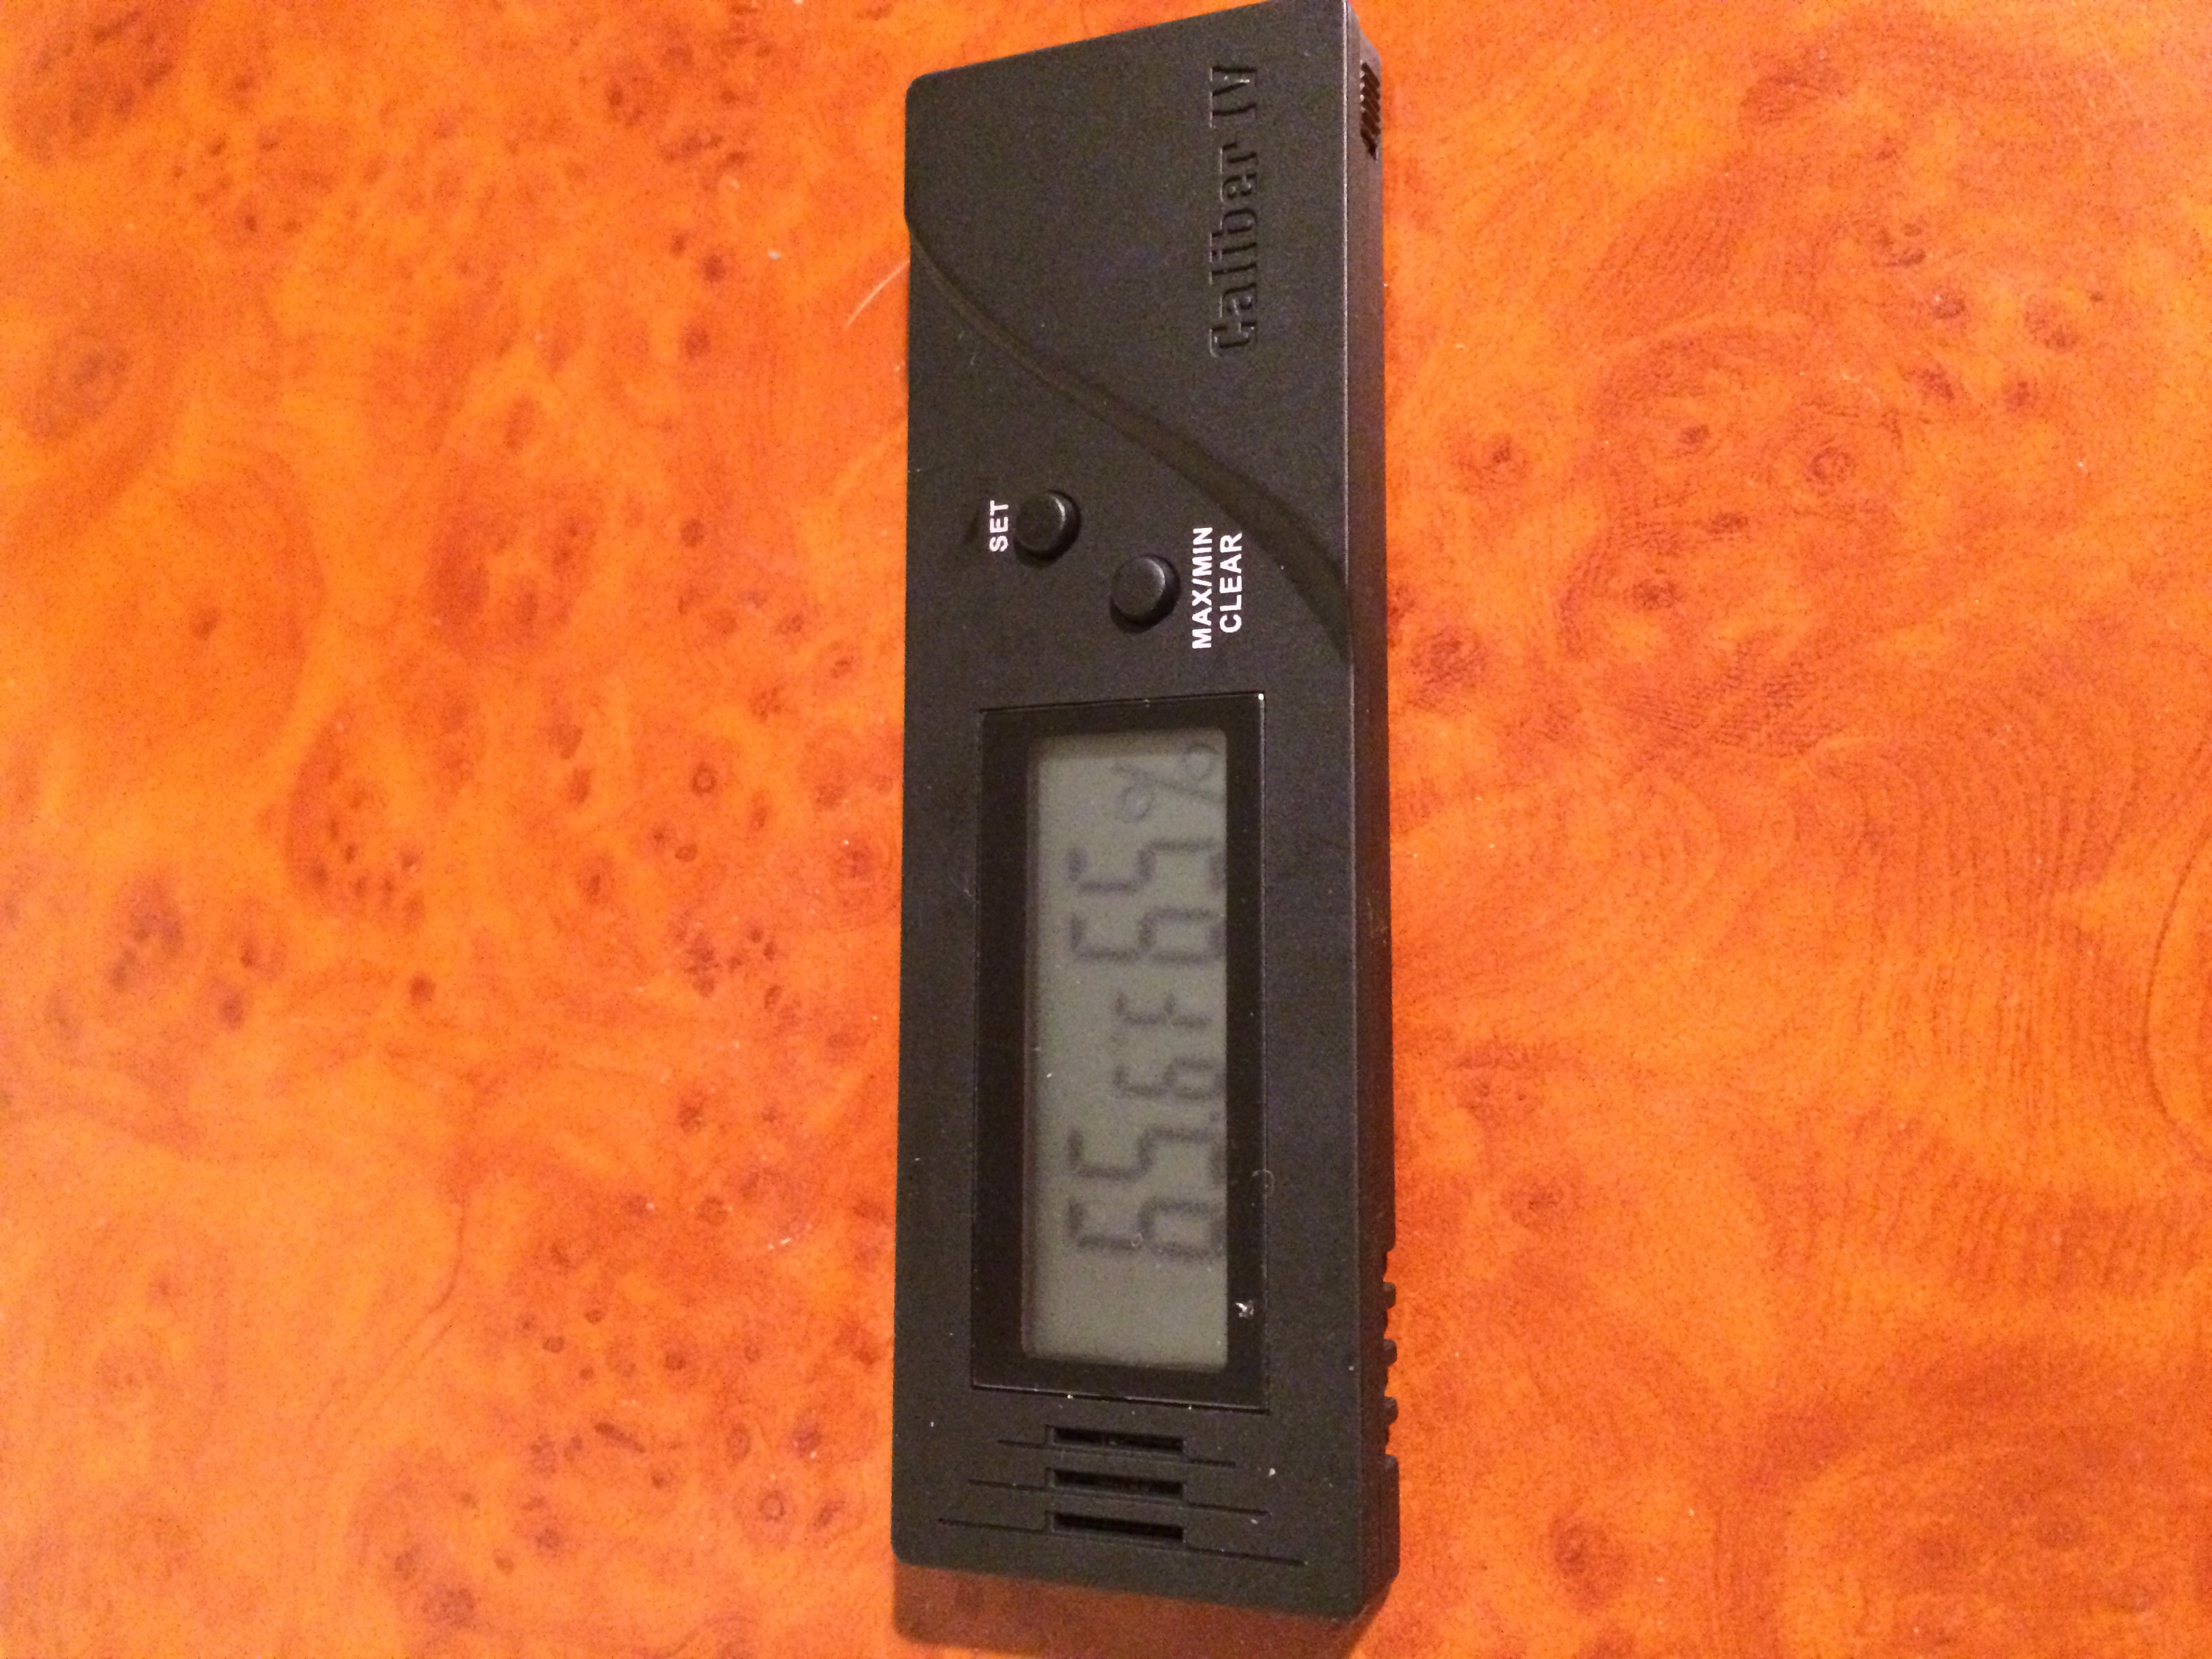 Cigar Oasis Caliber IV Digital Hygrometer for Cigar Humidors